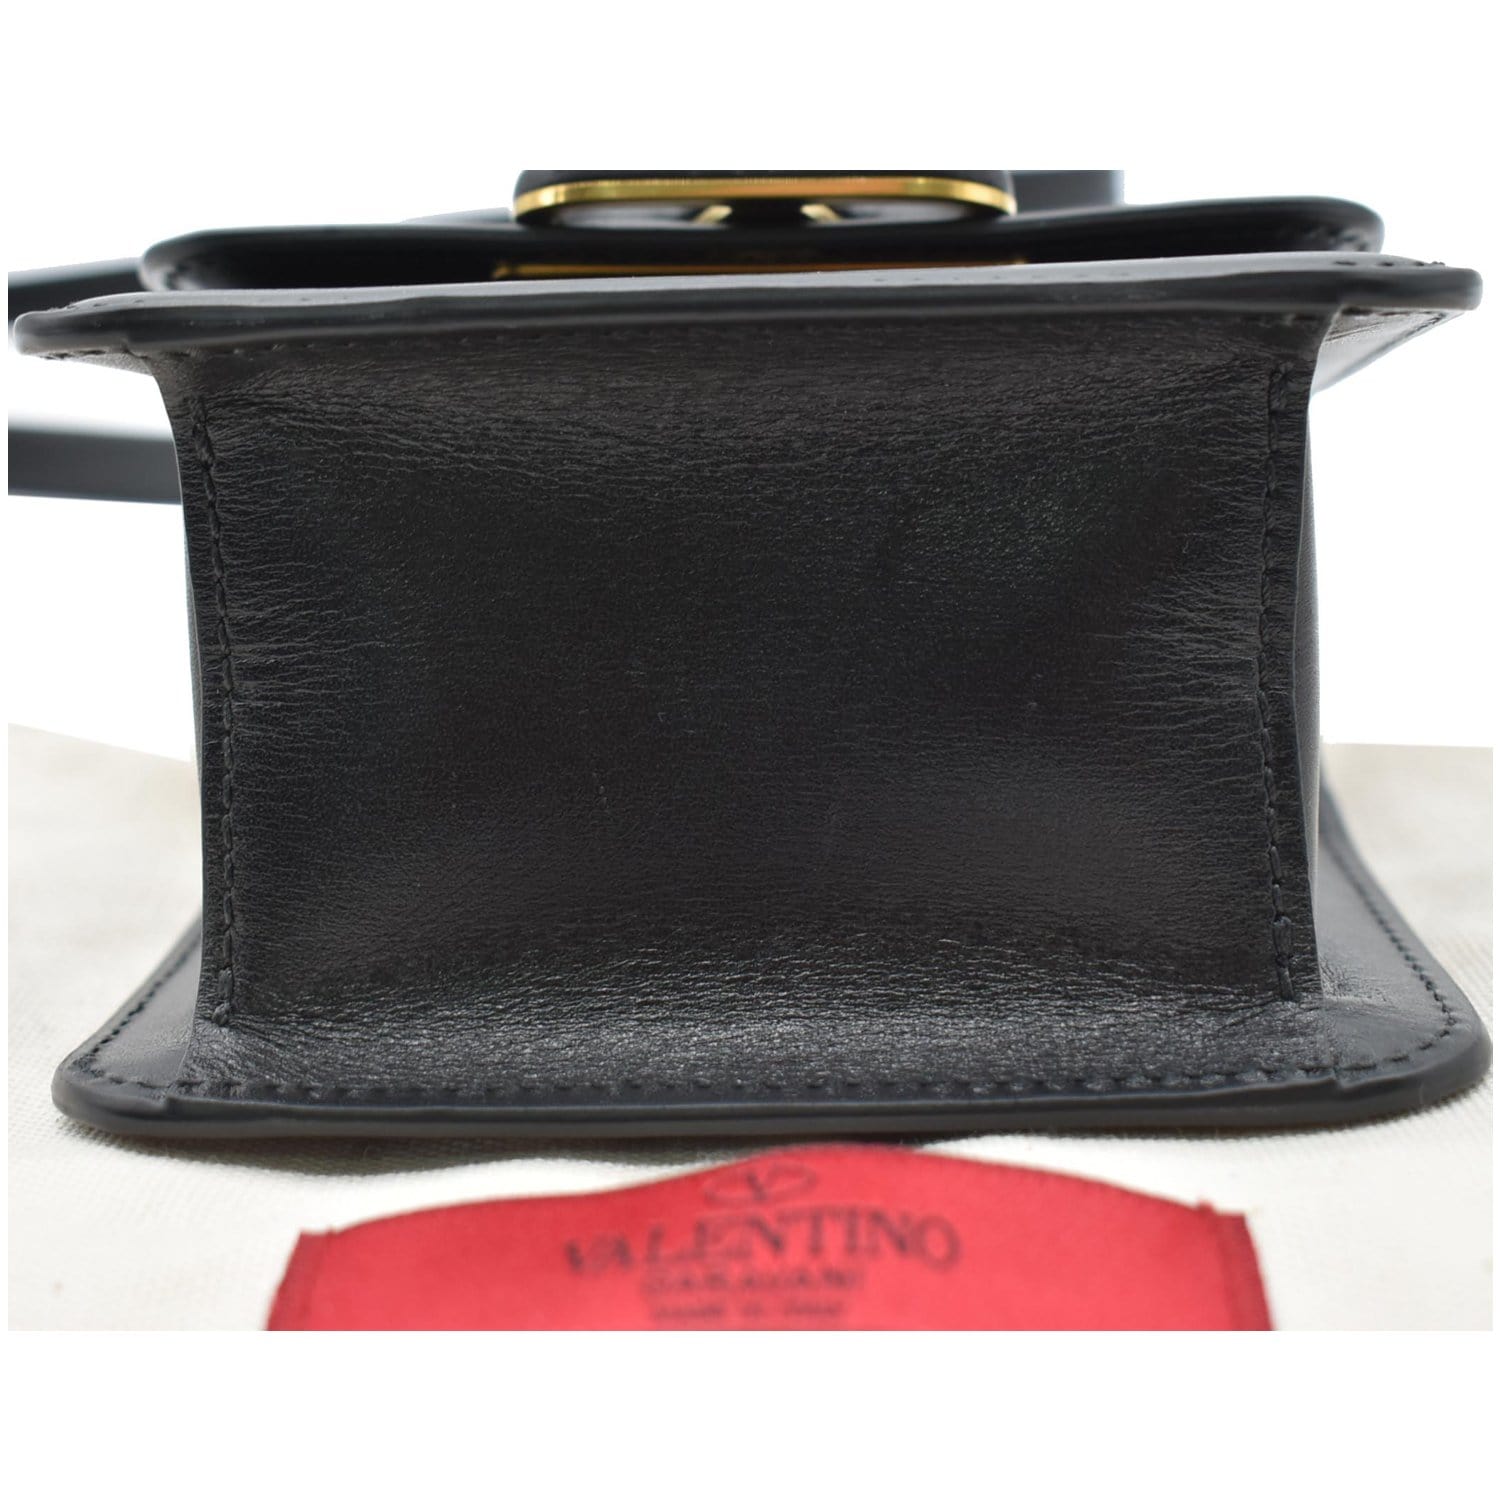 Valentino Garavani VSling Shoulder Bag Leather Micro Red 1011021